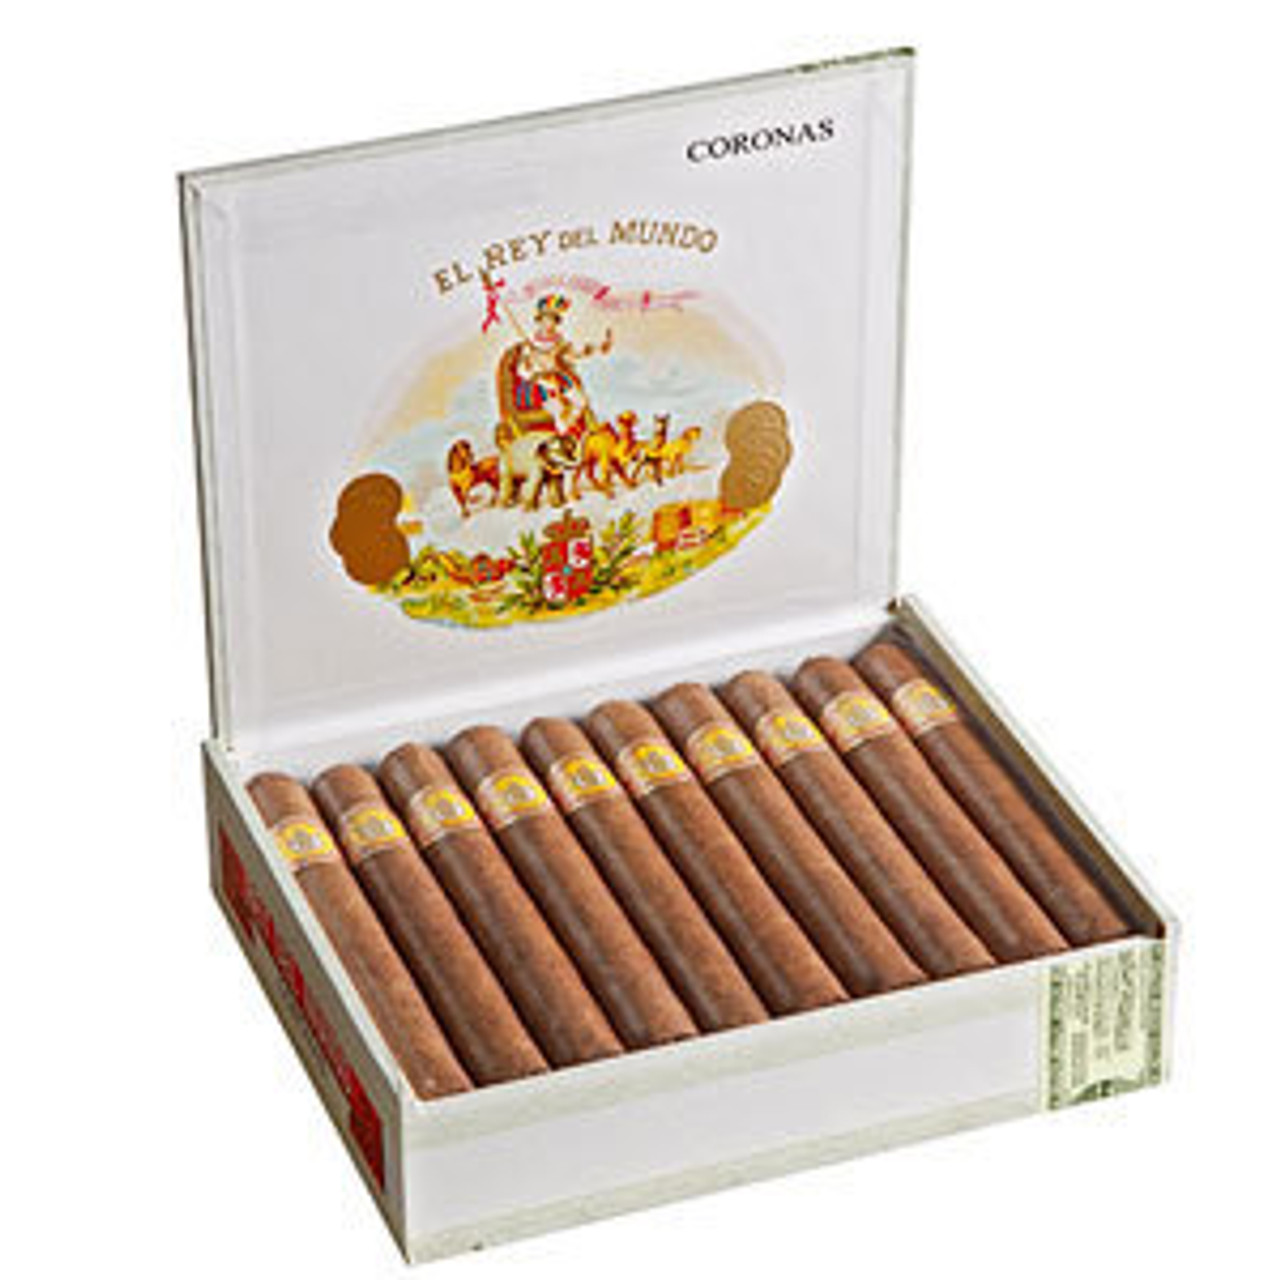 El Rey del Mundo Reserva Salado Cigars - 6.0 x 54 (Box of 40) *Box